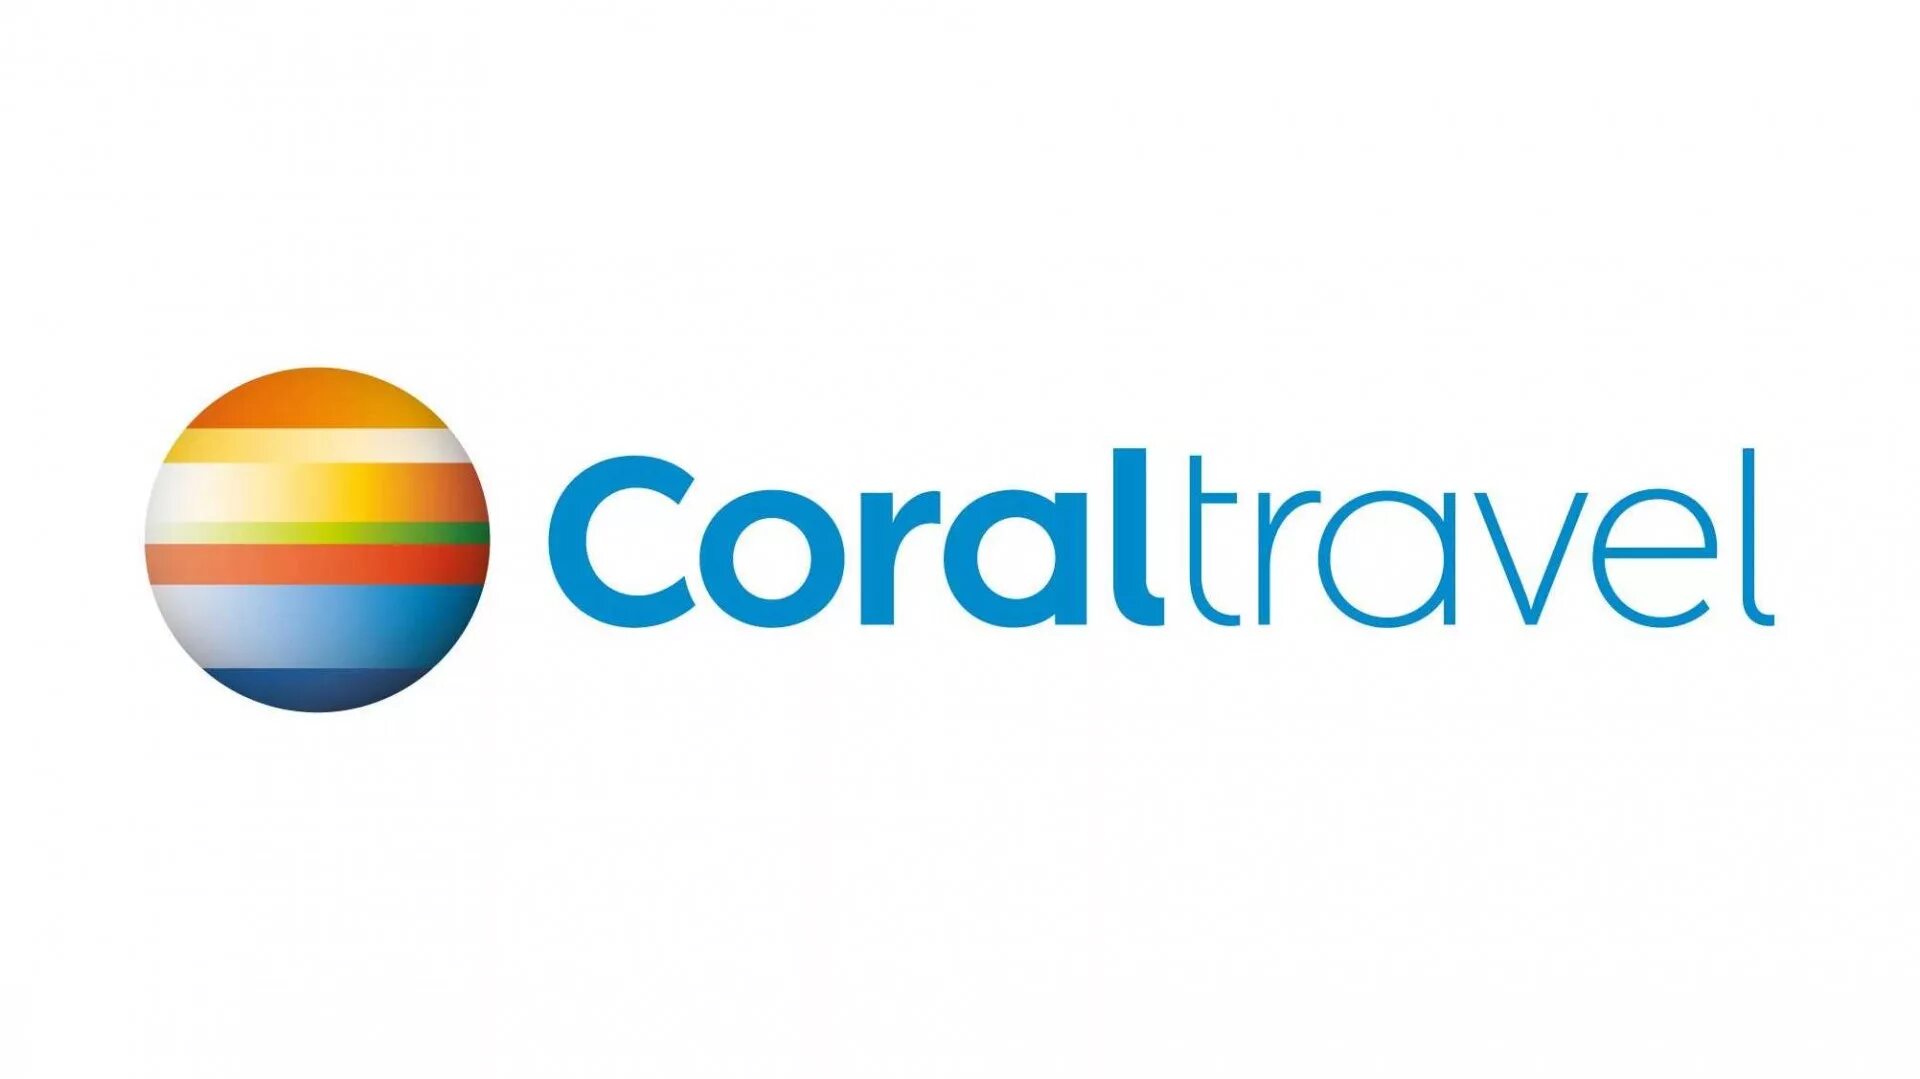 1 coral travel. Товарный знак Coral Travel. Корал Тревел туроператор. Корал Тревел логотип. Coral Travel туроператор.